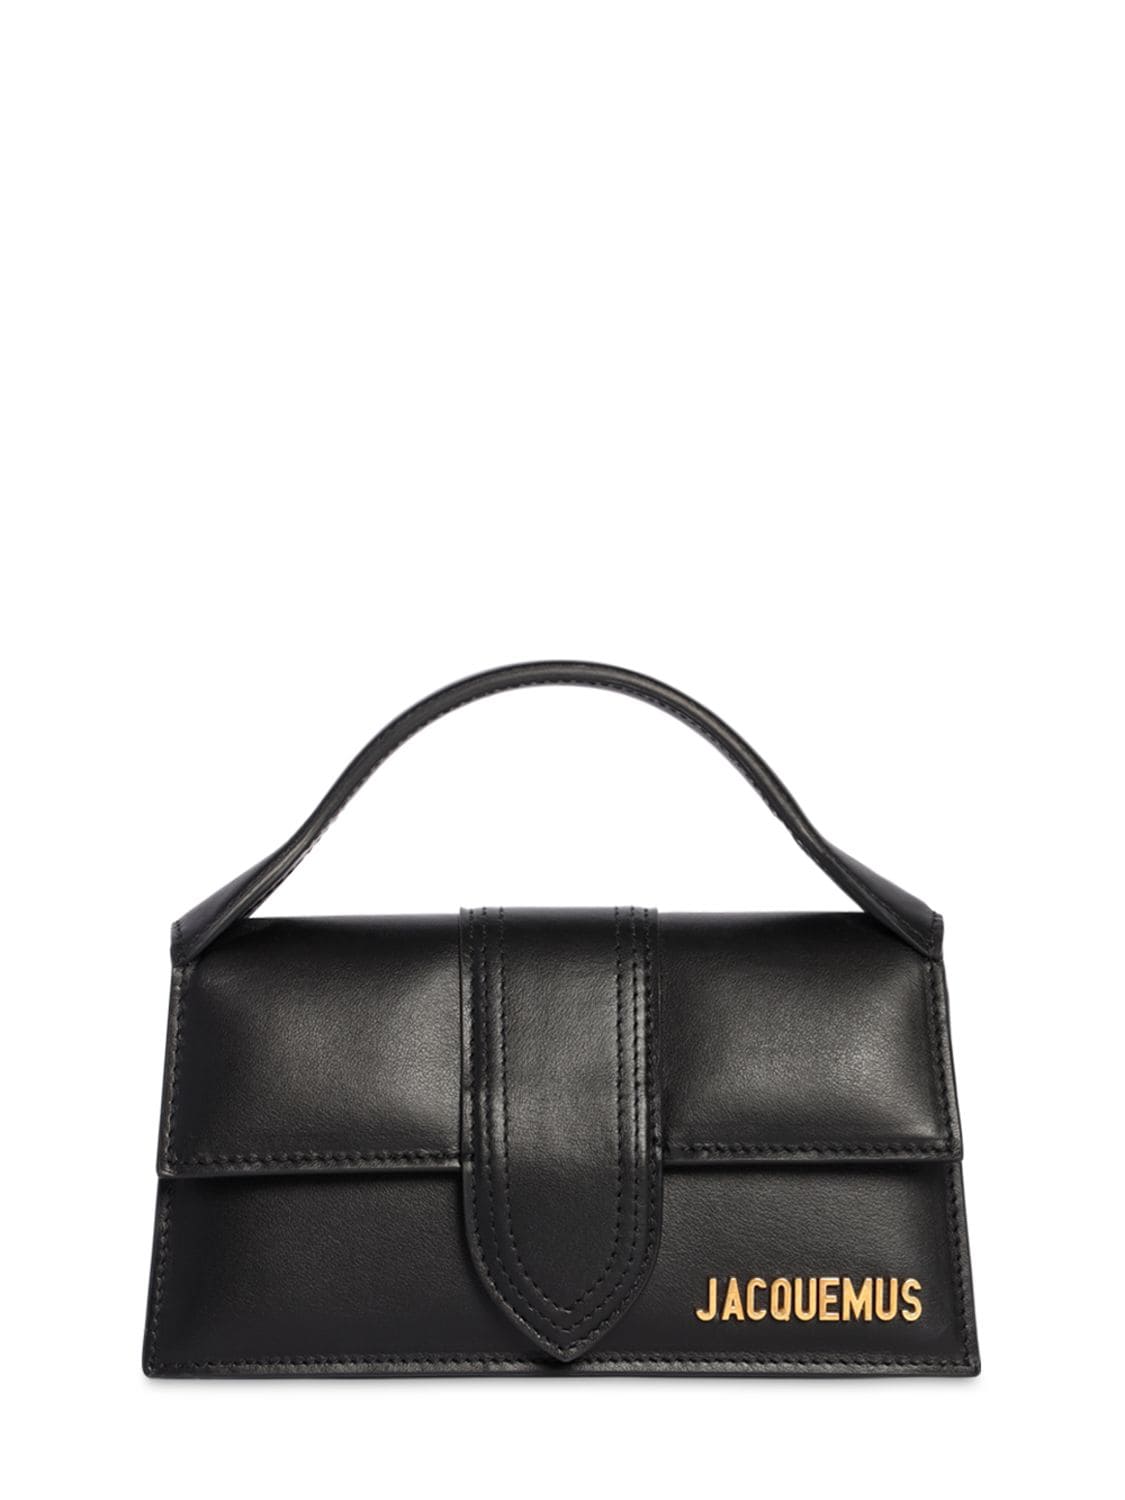 JACQUEMUS - Le bambino leather top handle bag - Black | Luisaviaroma